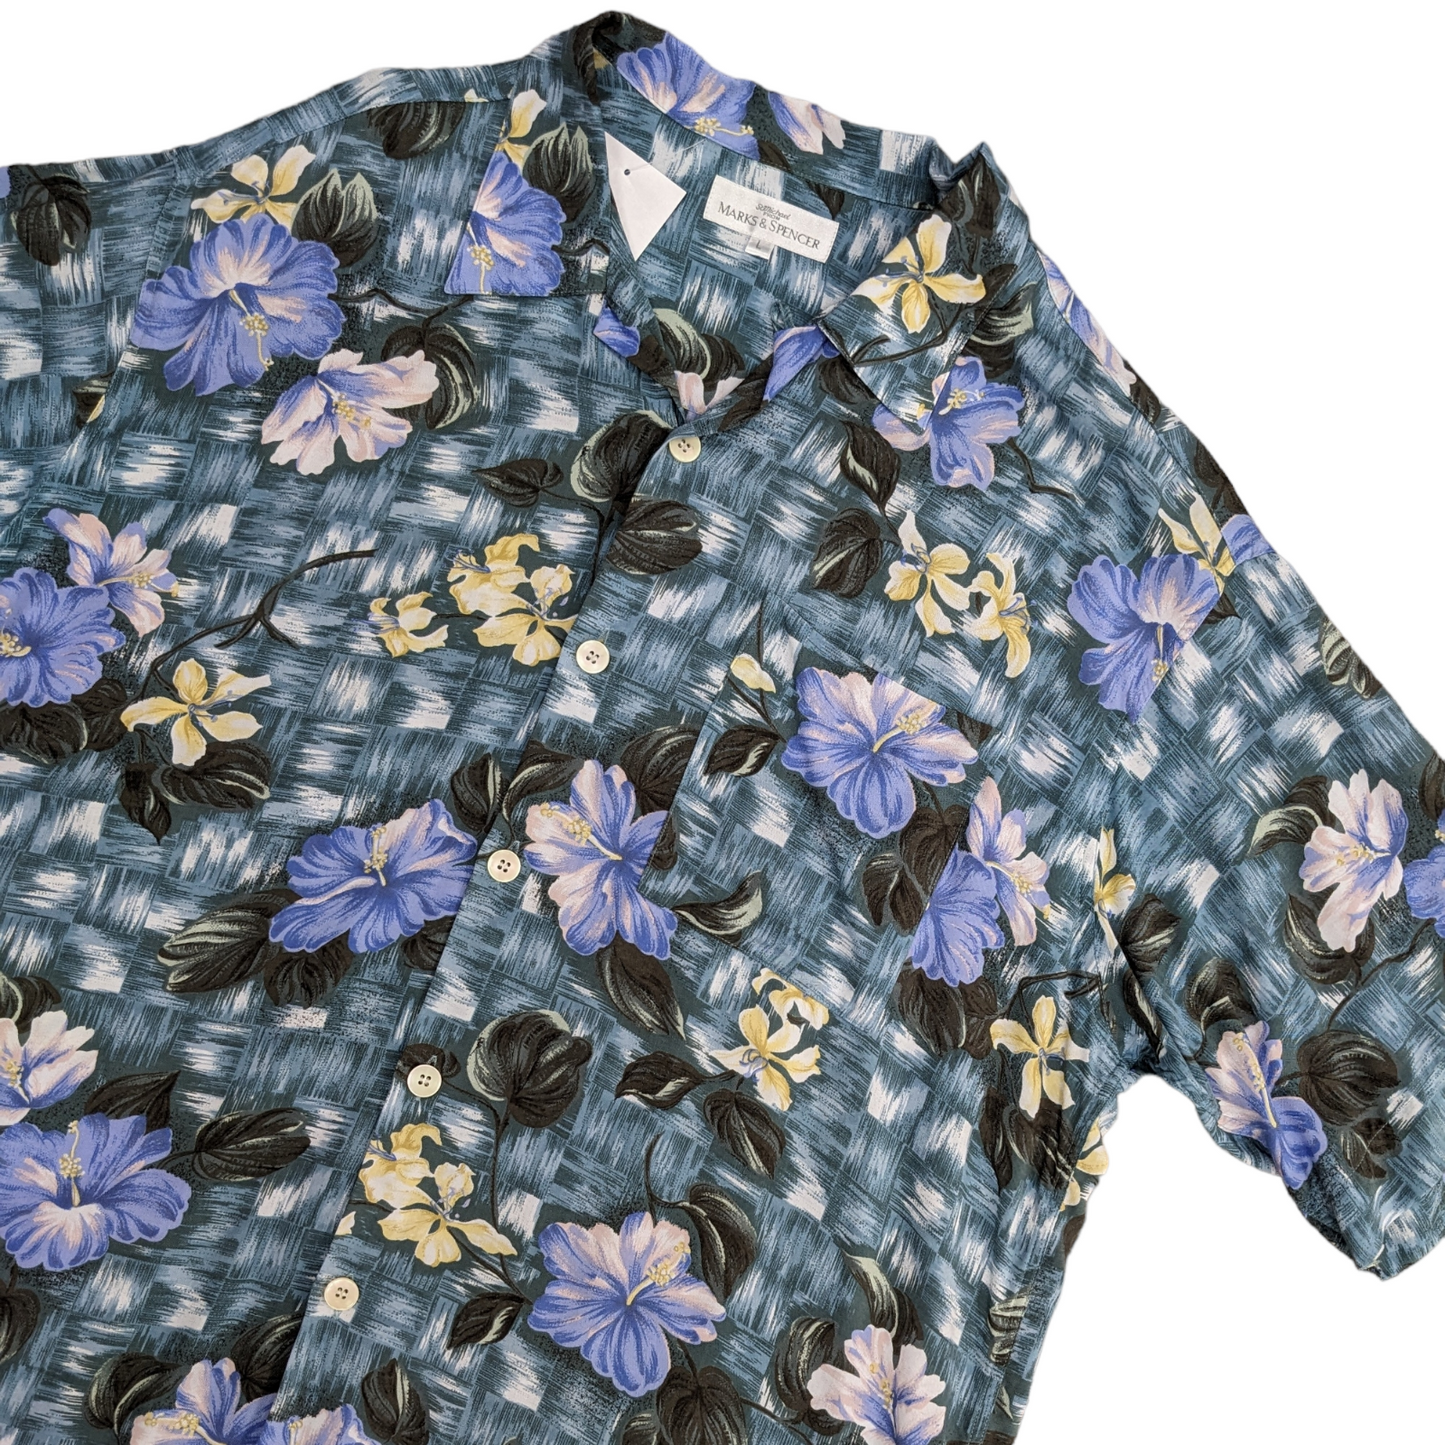 90s St Michael Floral Pattern Cuban Collar Shirt Size L